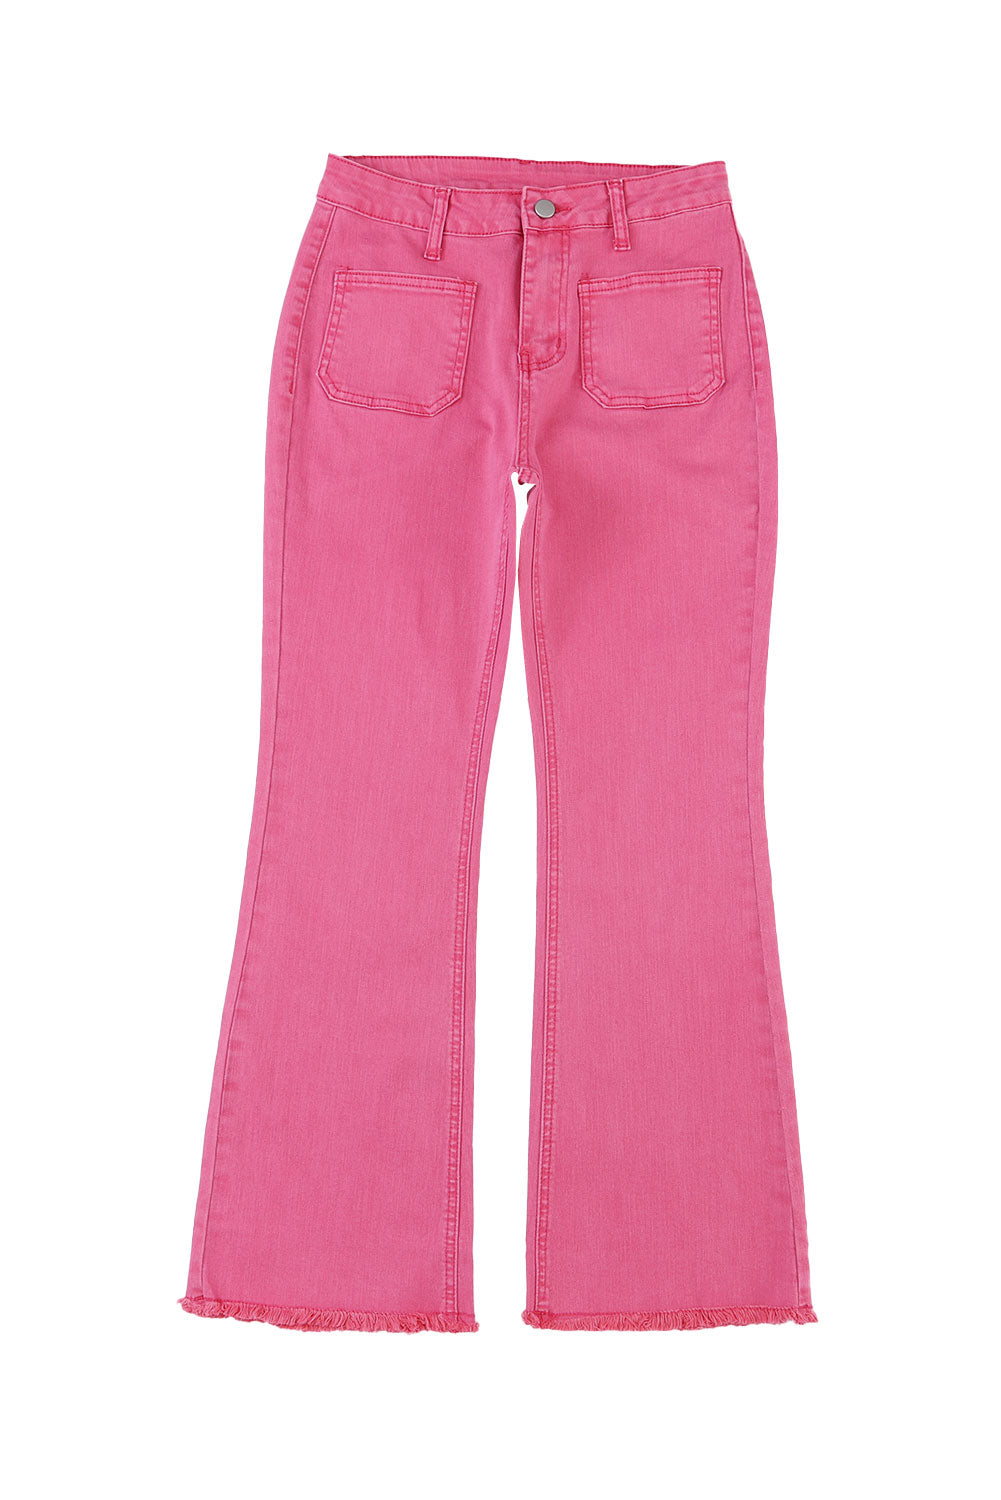 Women's Pink Raw Hem Light Wash Flare Mid Rise Pants